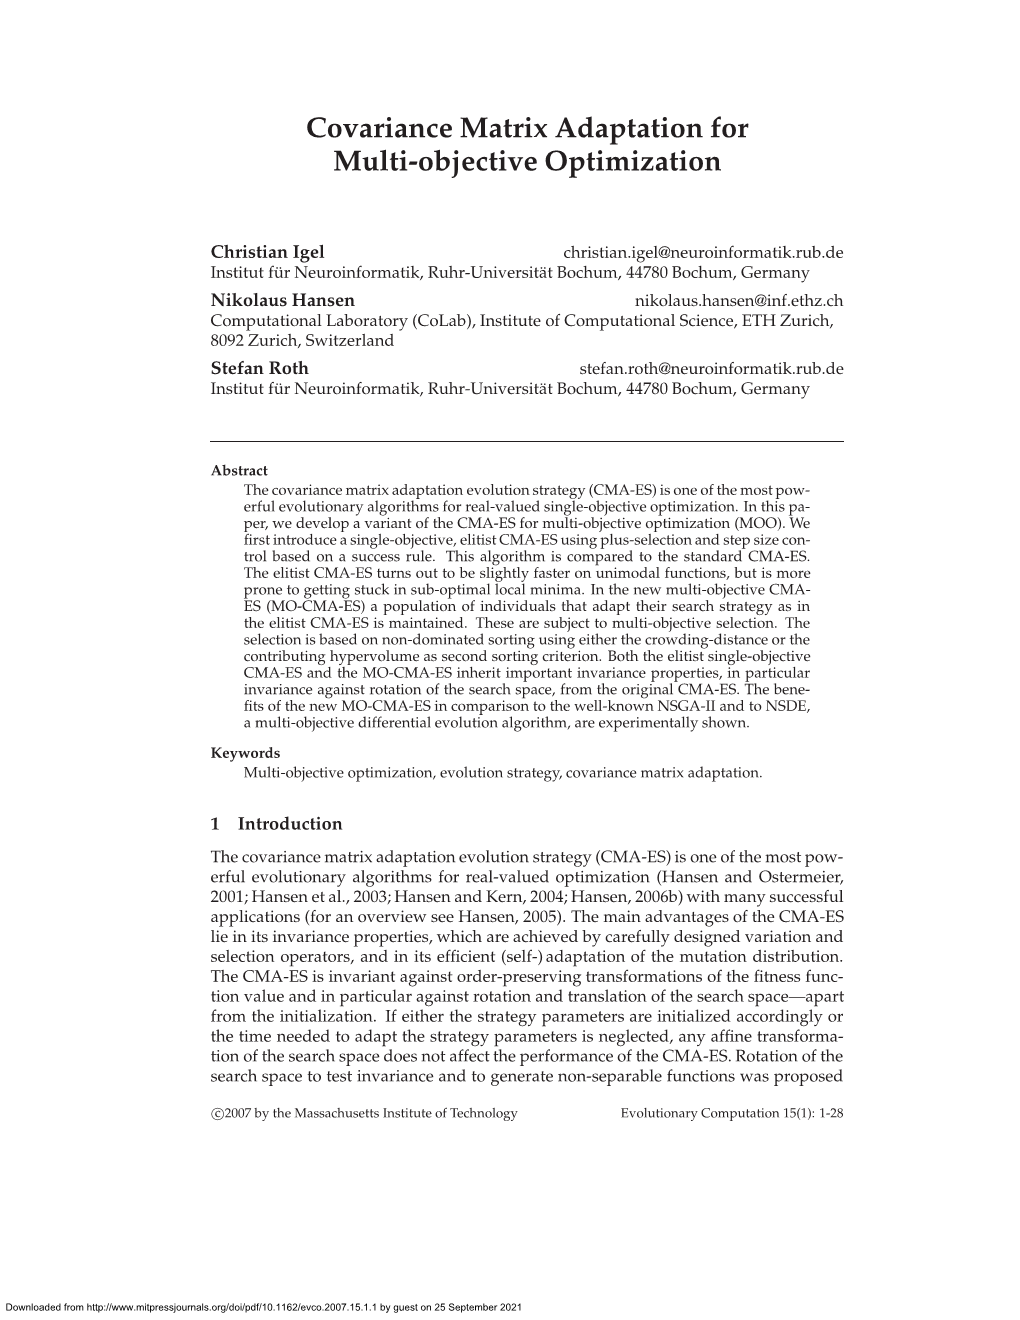 Covariance Matrix Adaptation for Multi-Objective Optimization